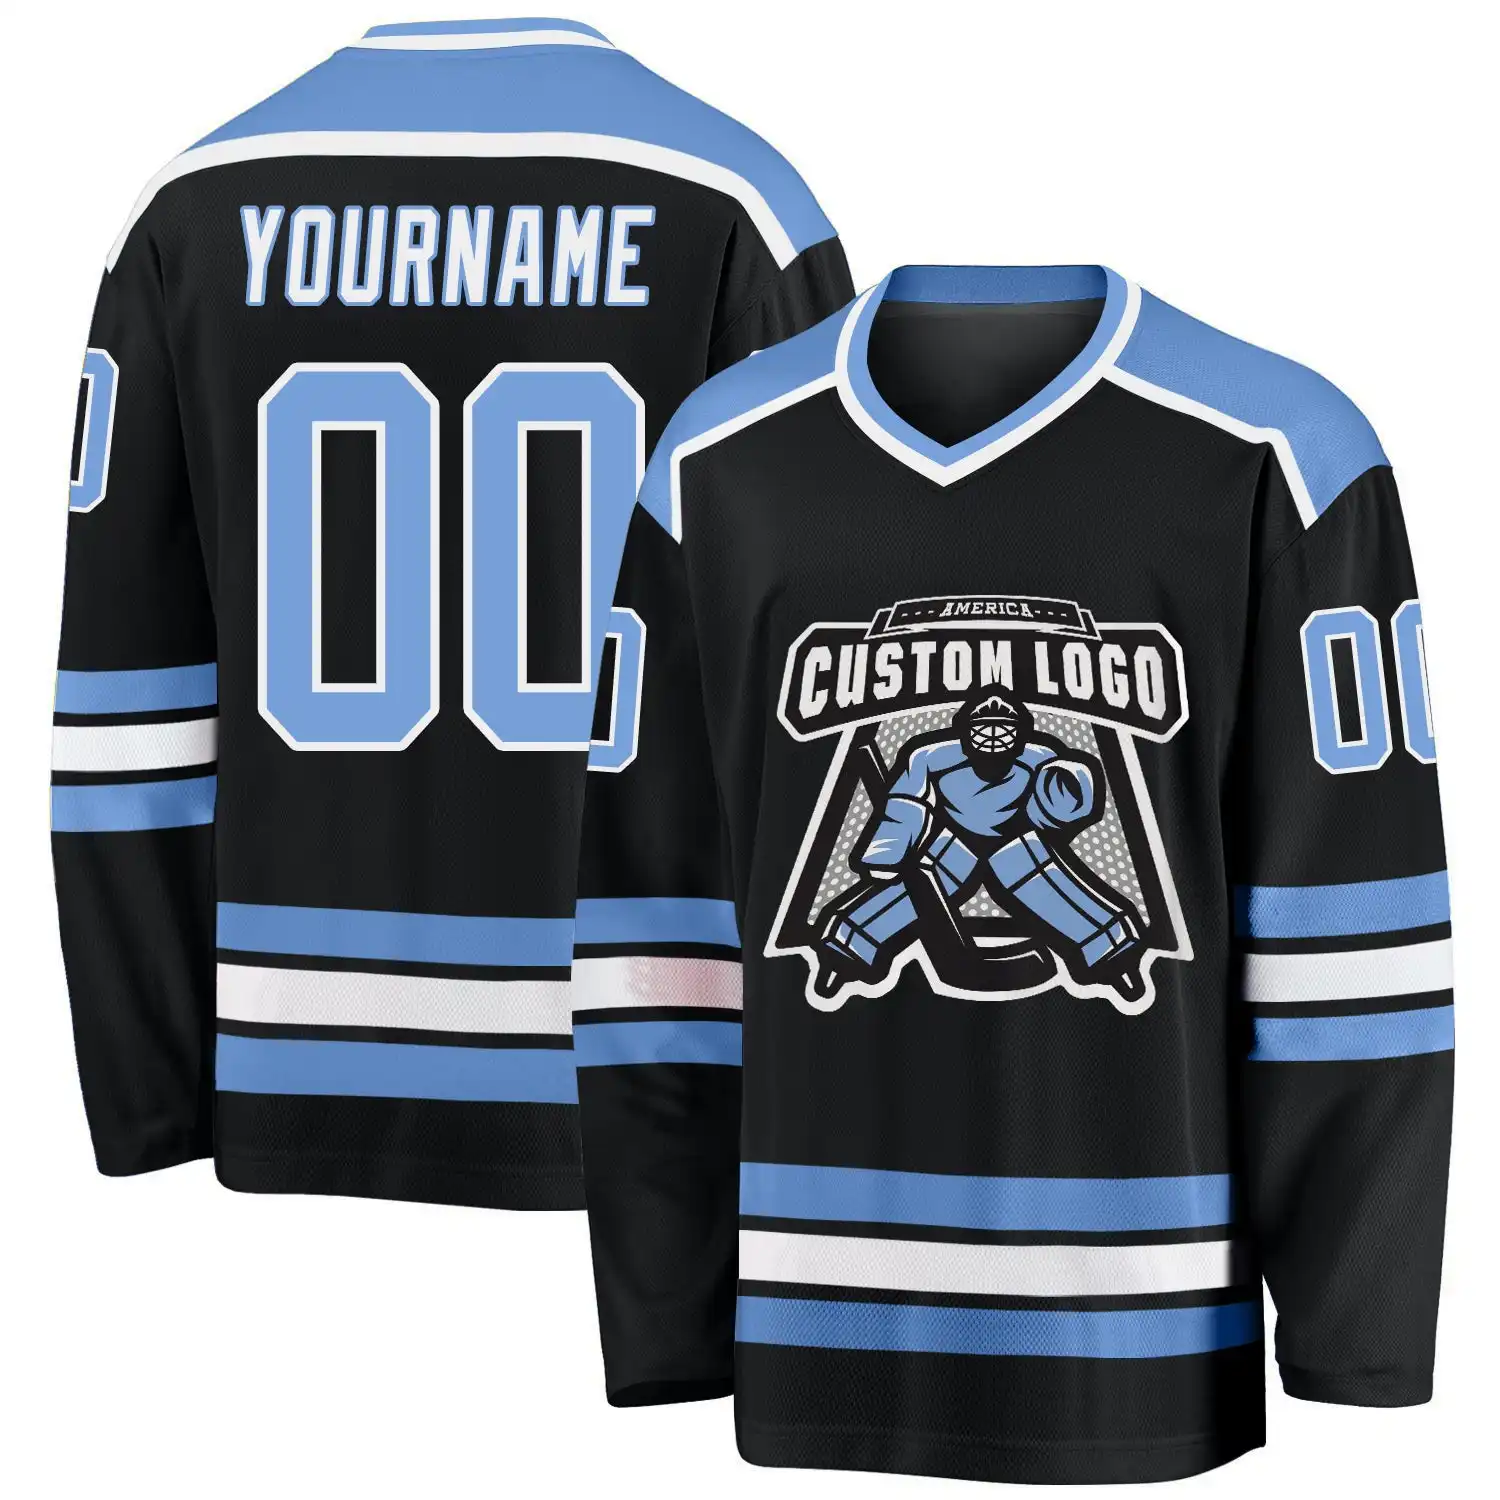 Stitched And Print Black Light Blue-white Hockey Jersey Custom